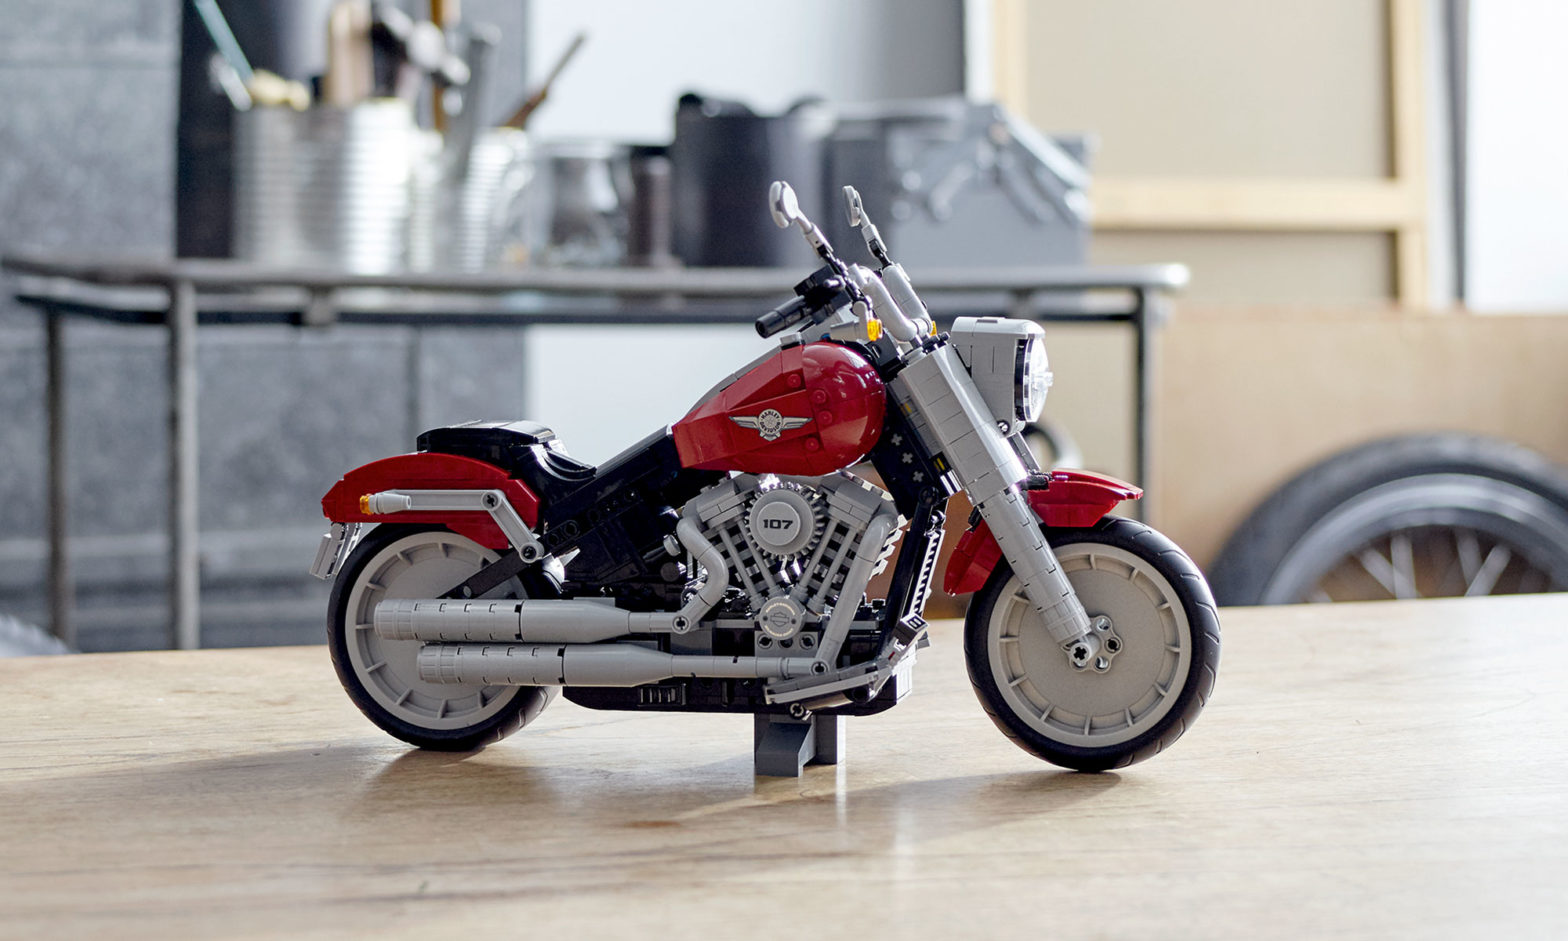 Presenting The 10269 Lego Harley Davidson Fat Boy Jay S Brick Blog